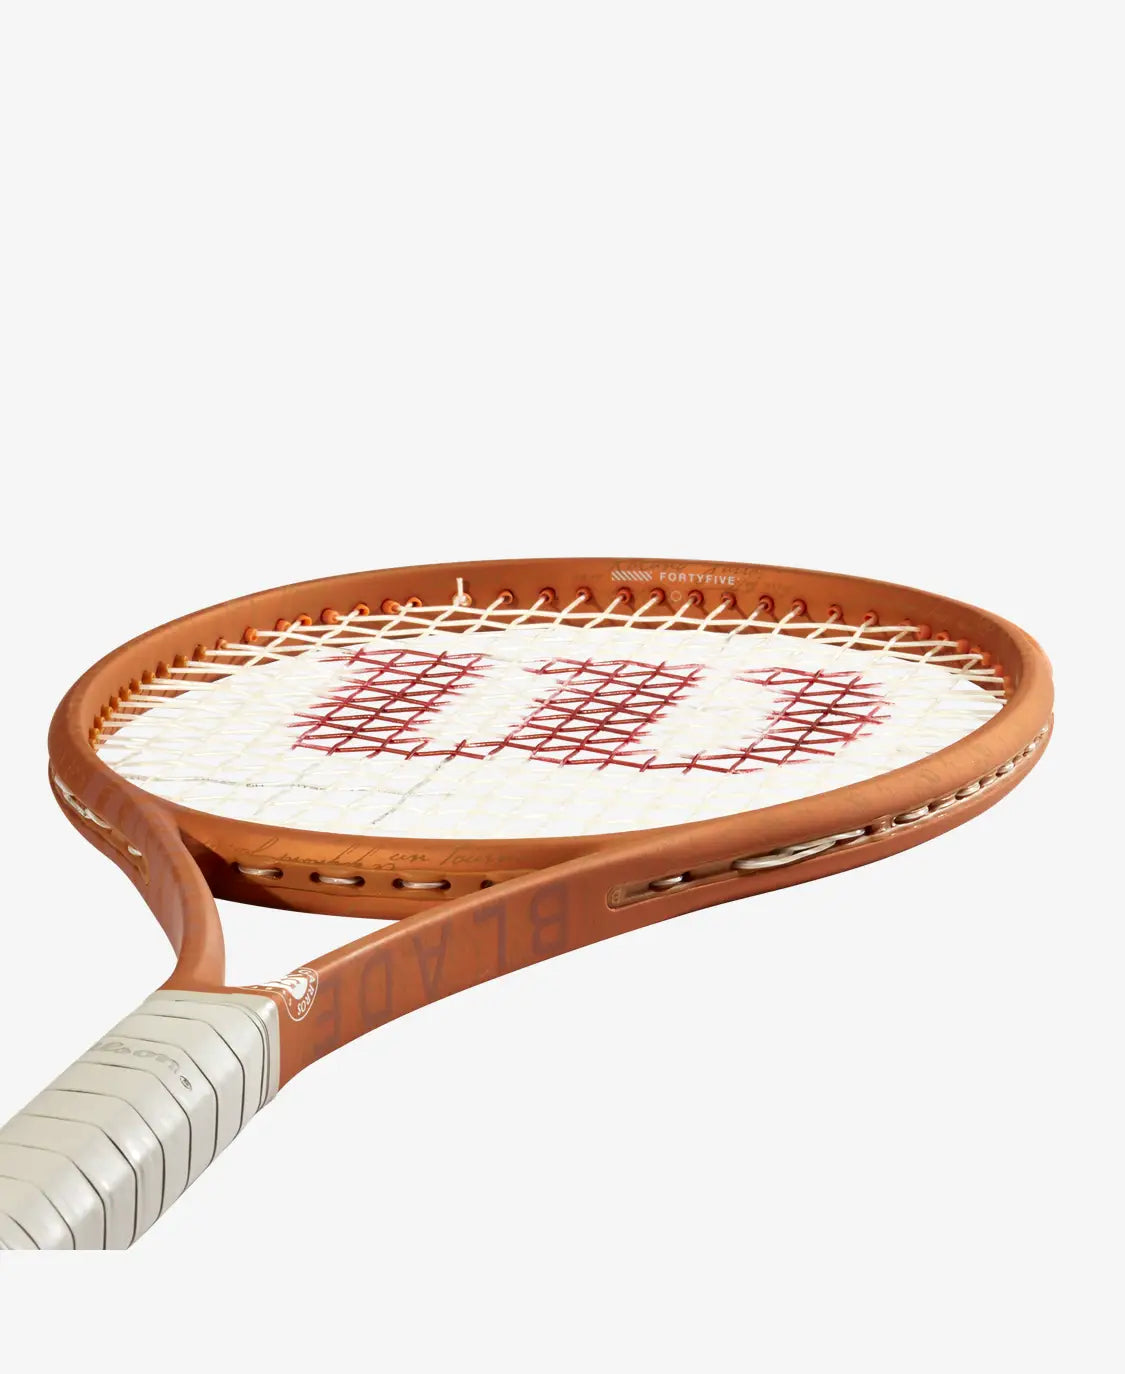 Wilson x Roland Garros Blade 98 v8 (305g) racket - Clay Limited